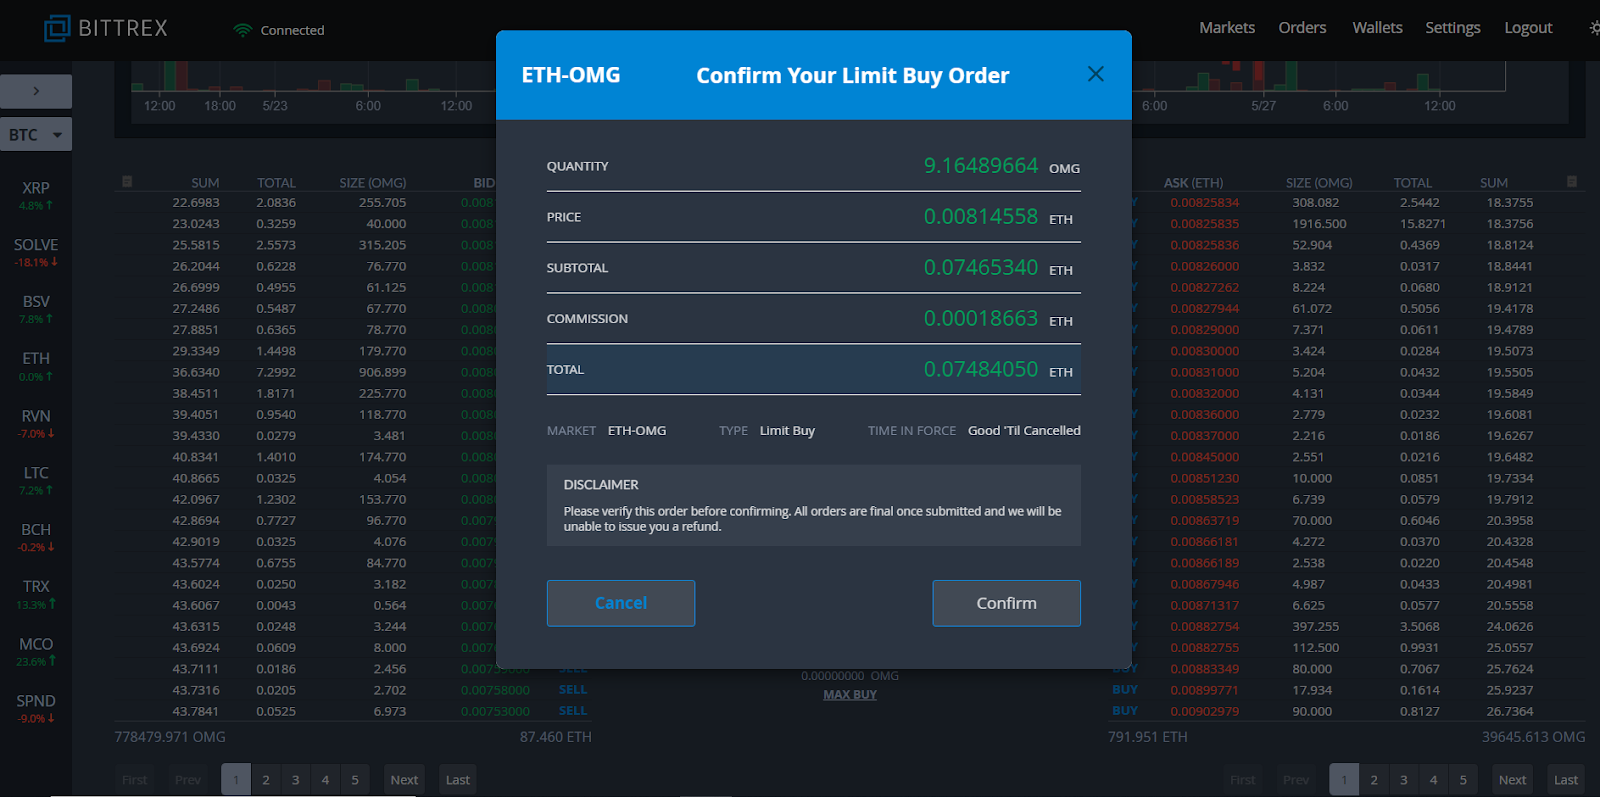 Bittrex ETH-OMG confirm your limit buy order screen shot.